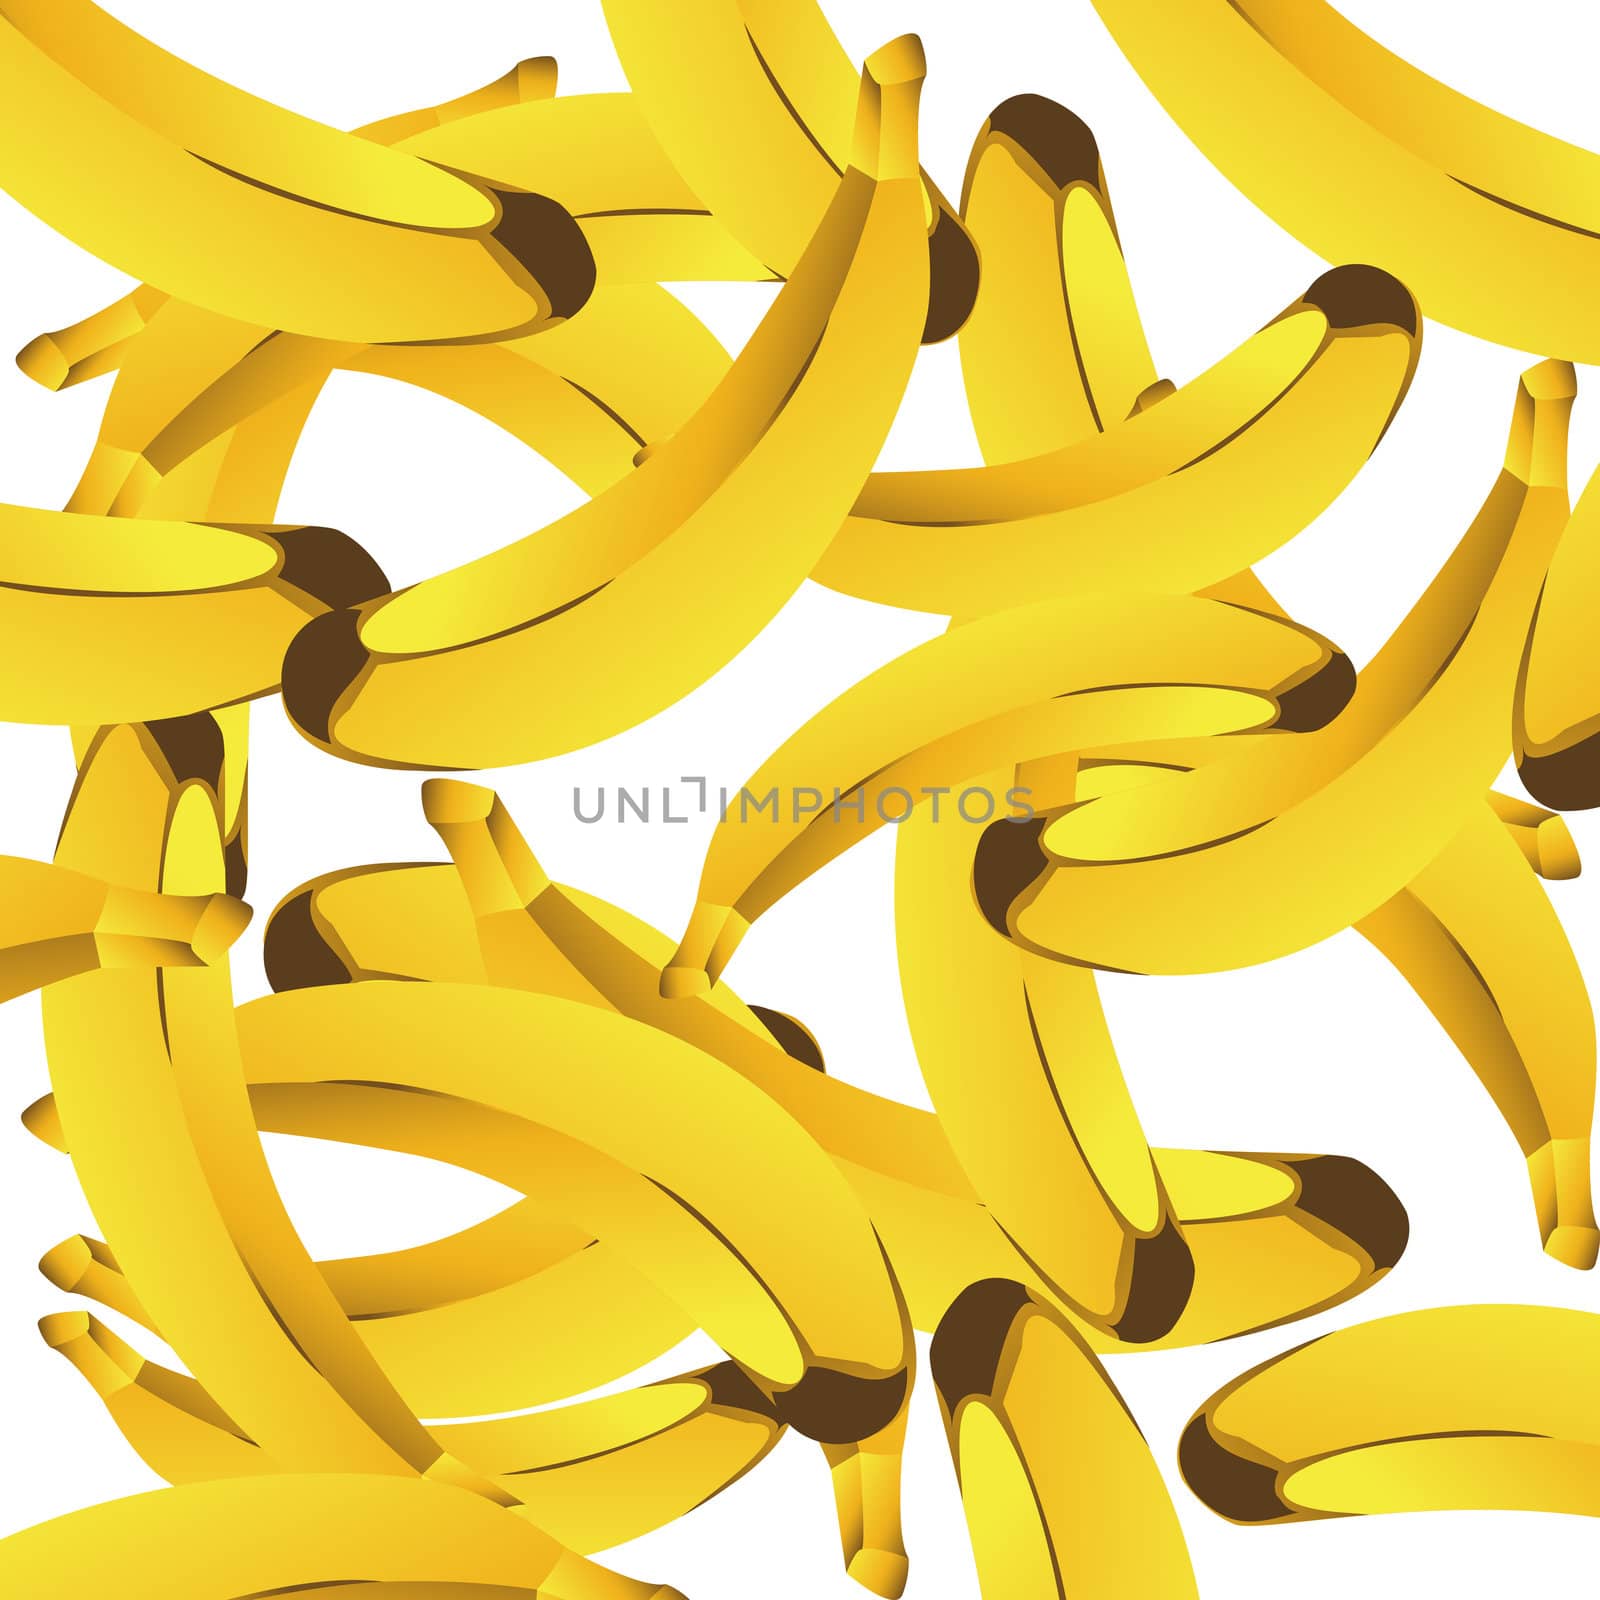 banana by Lirch